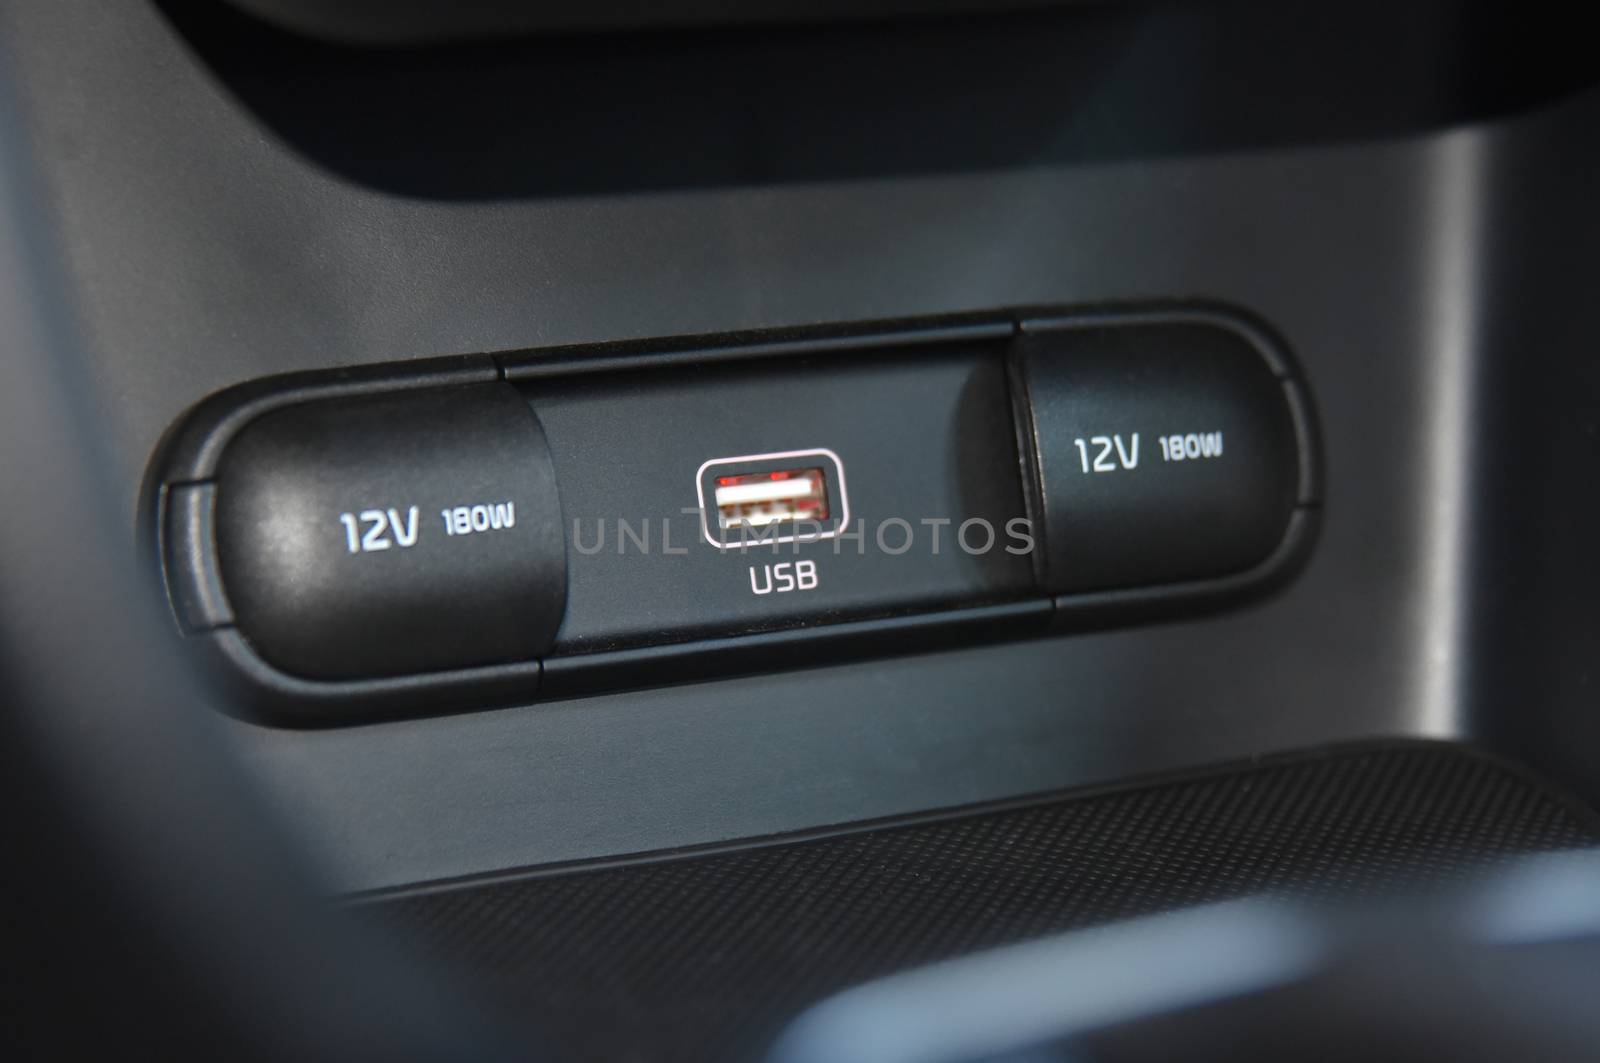 12V socket, wireless mobile phone charger, USB port, AUX port on car dashboard